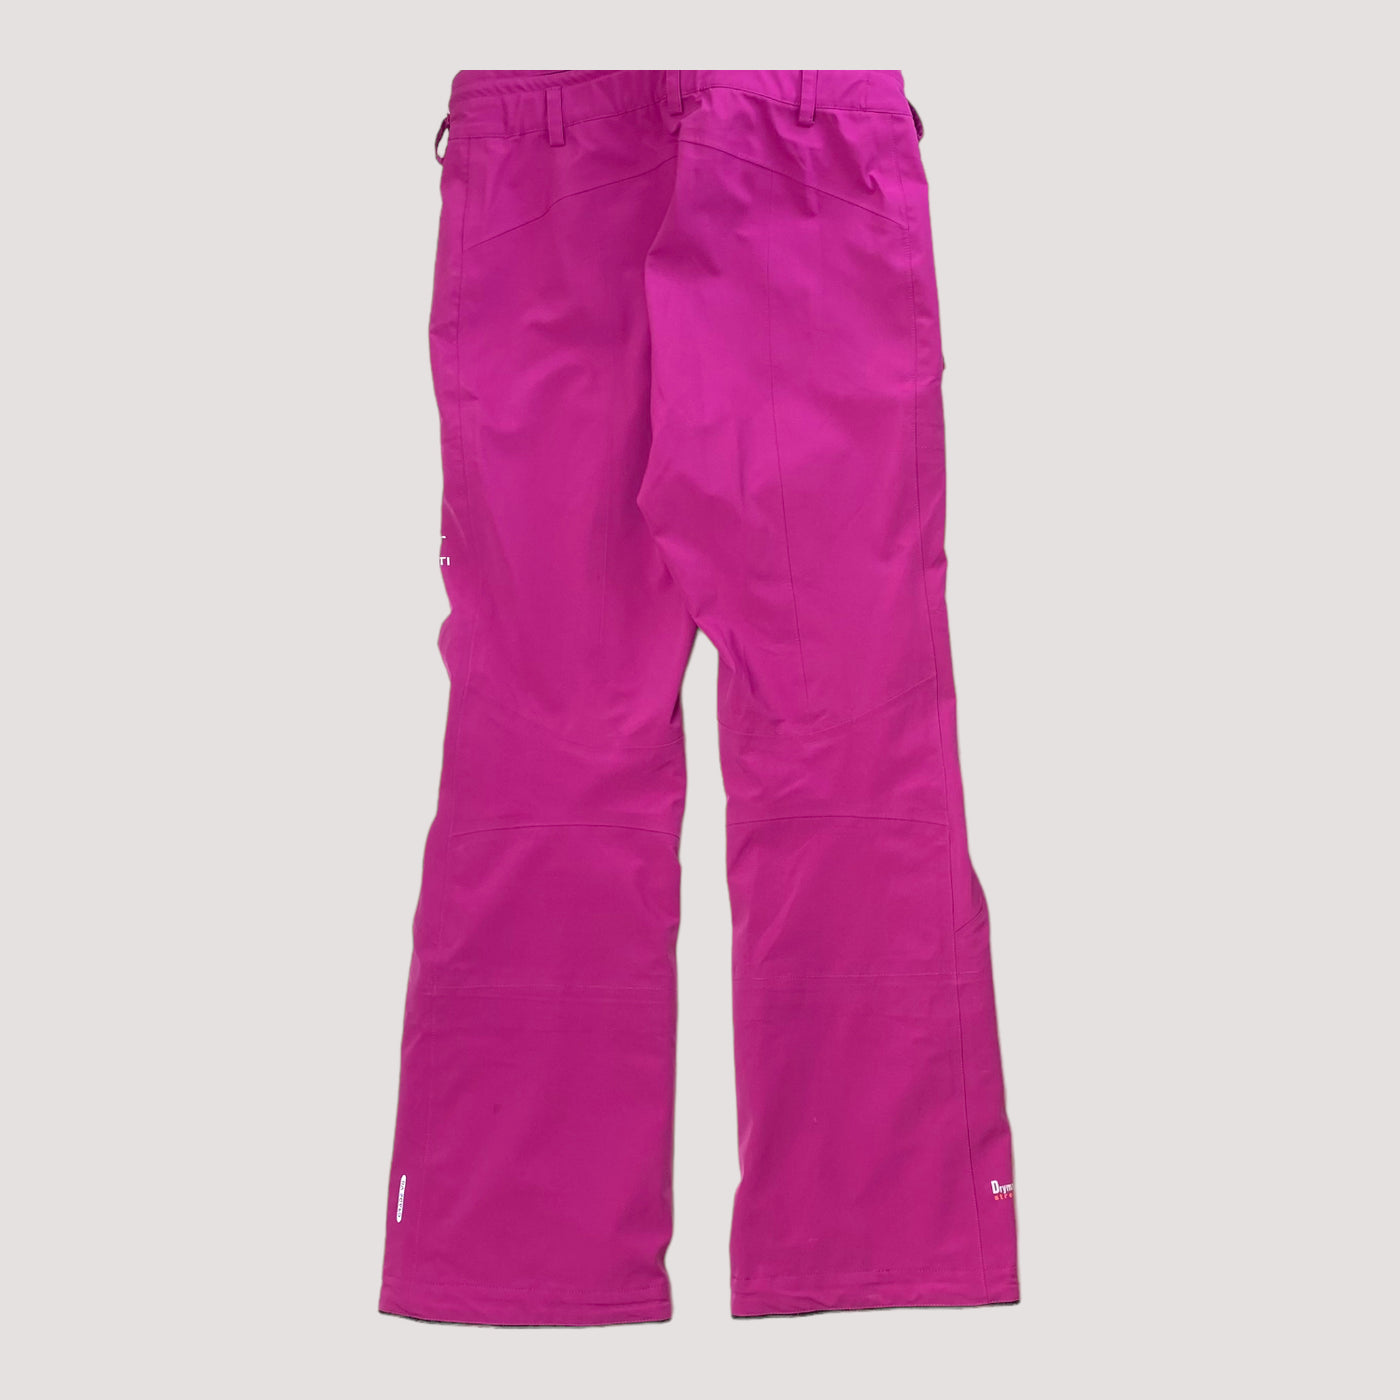 drymaxX ski pants, fuchsia | woman 38